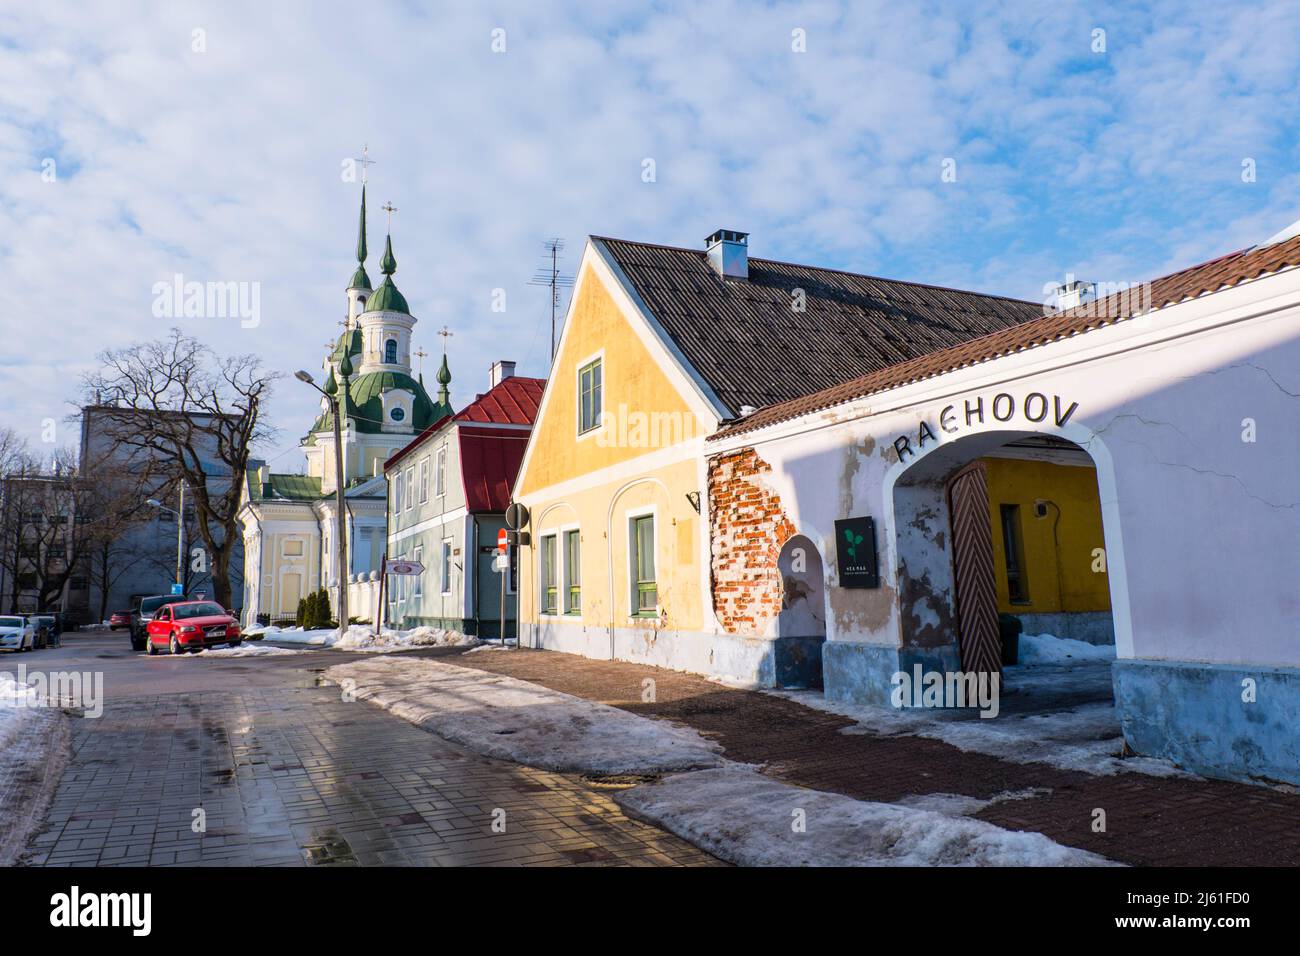 Uus street, central Pärnu, Estonia Stock Photo